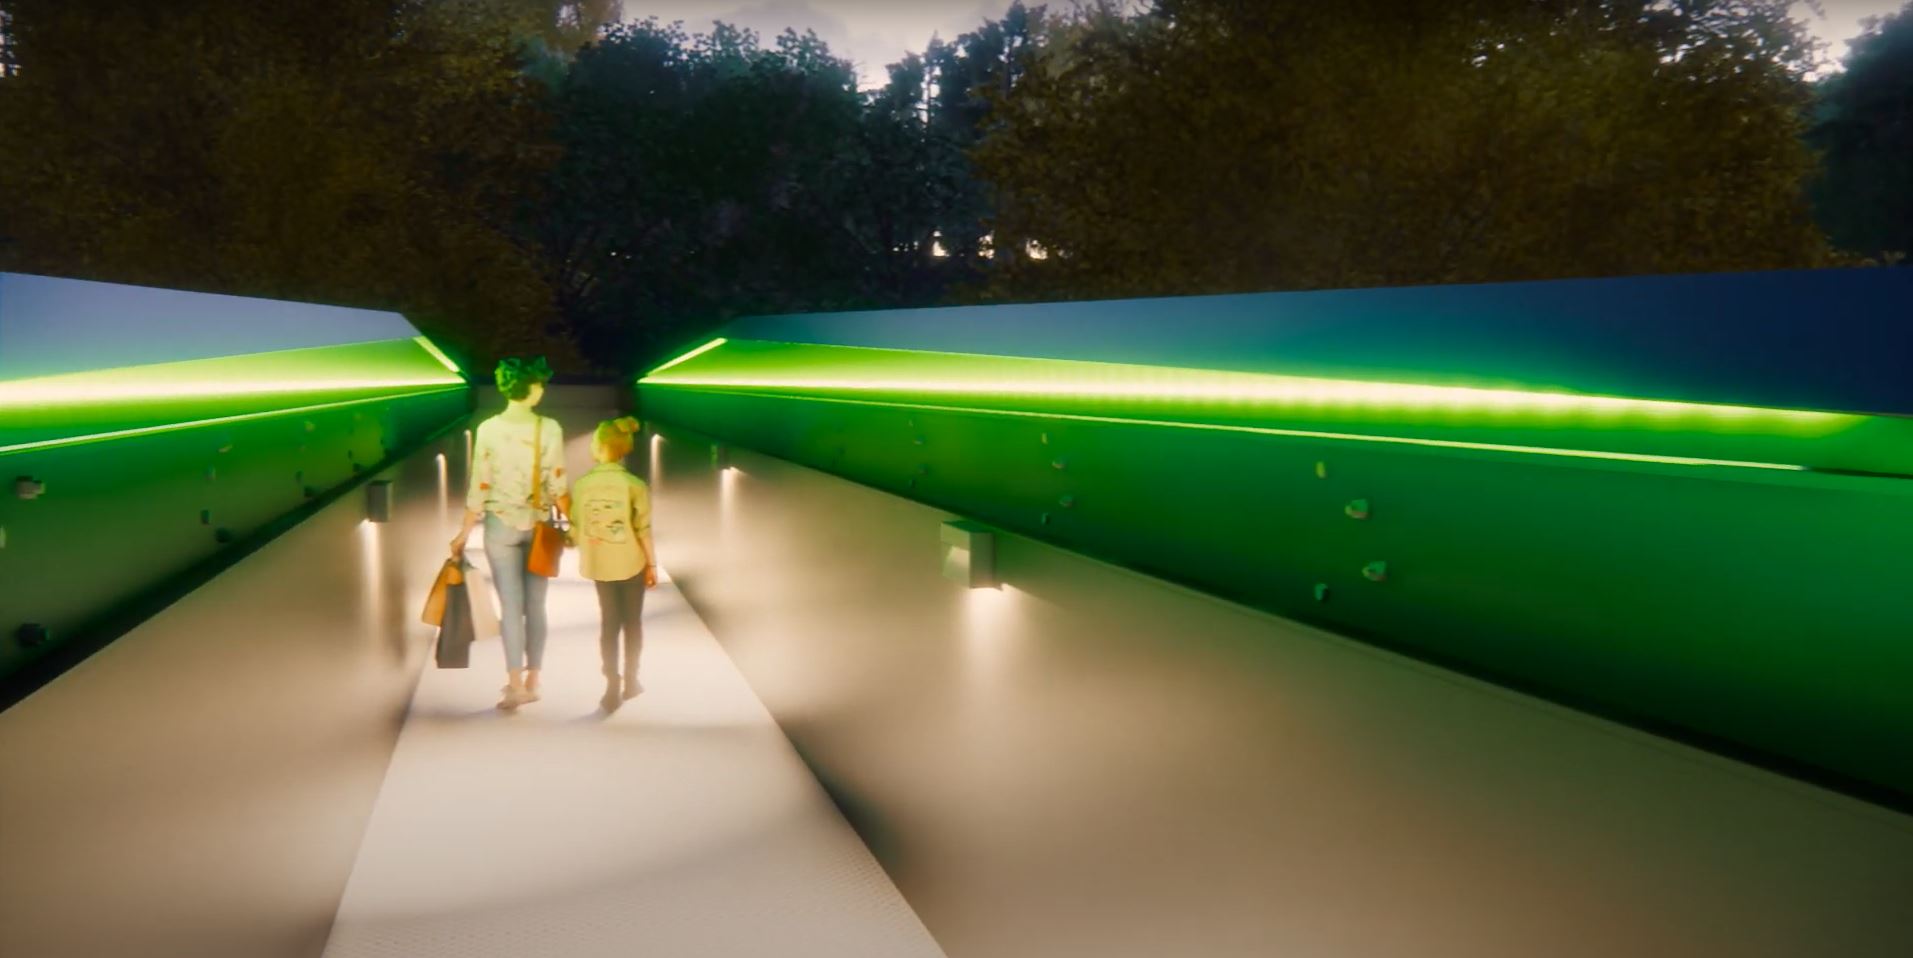 Taziker FRP Legacy footbridge design with lighting on walkway at night. 